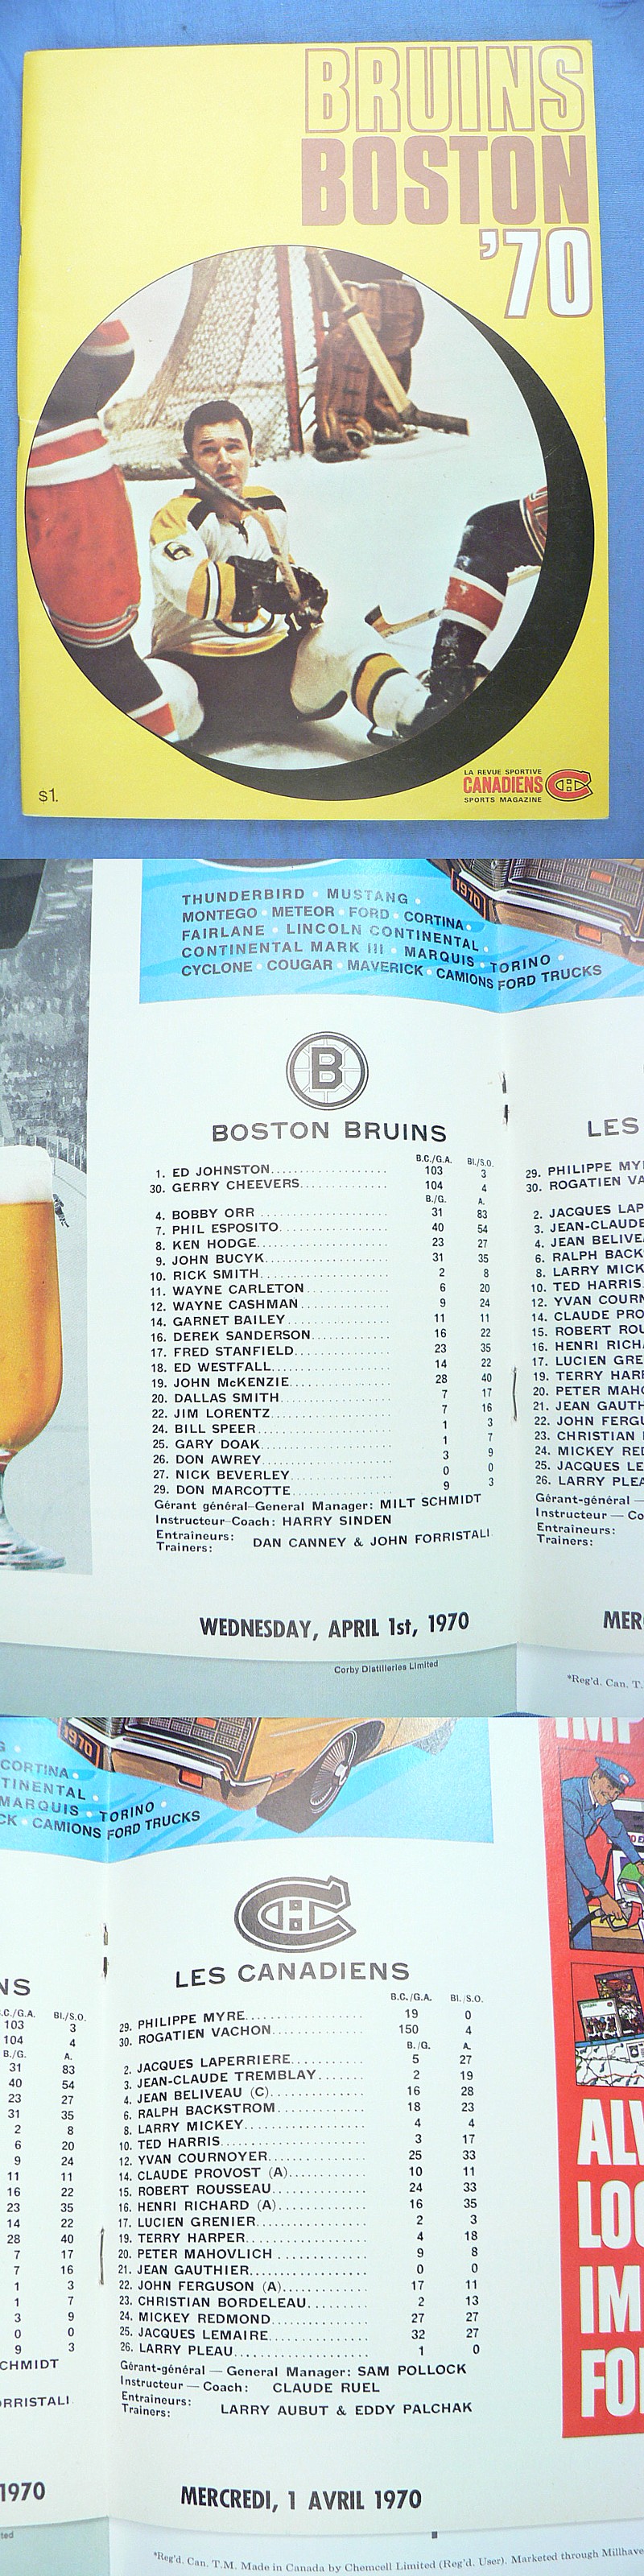 1969-70 BOSTON BRUINS VS MONTREAL CANADIENS PROGRAM photo